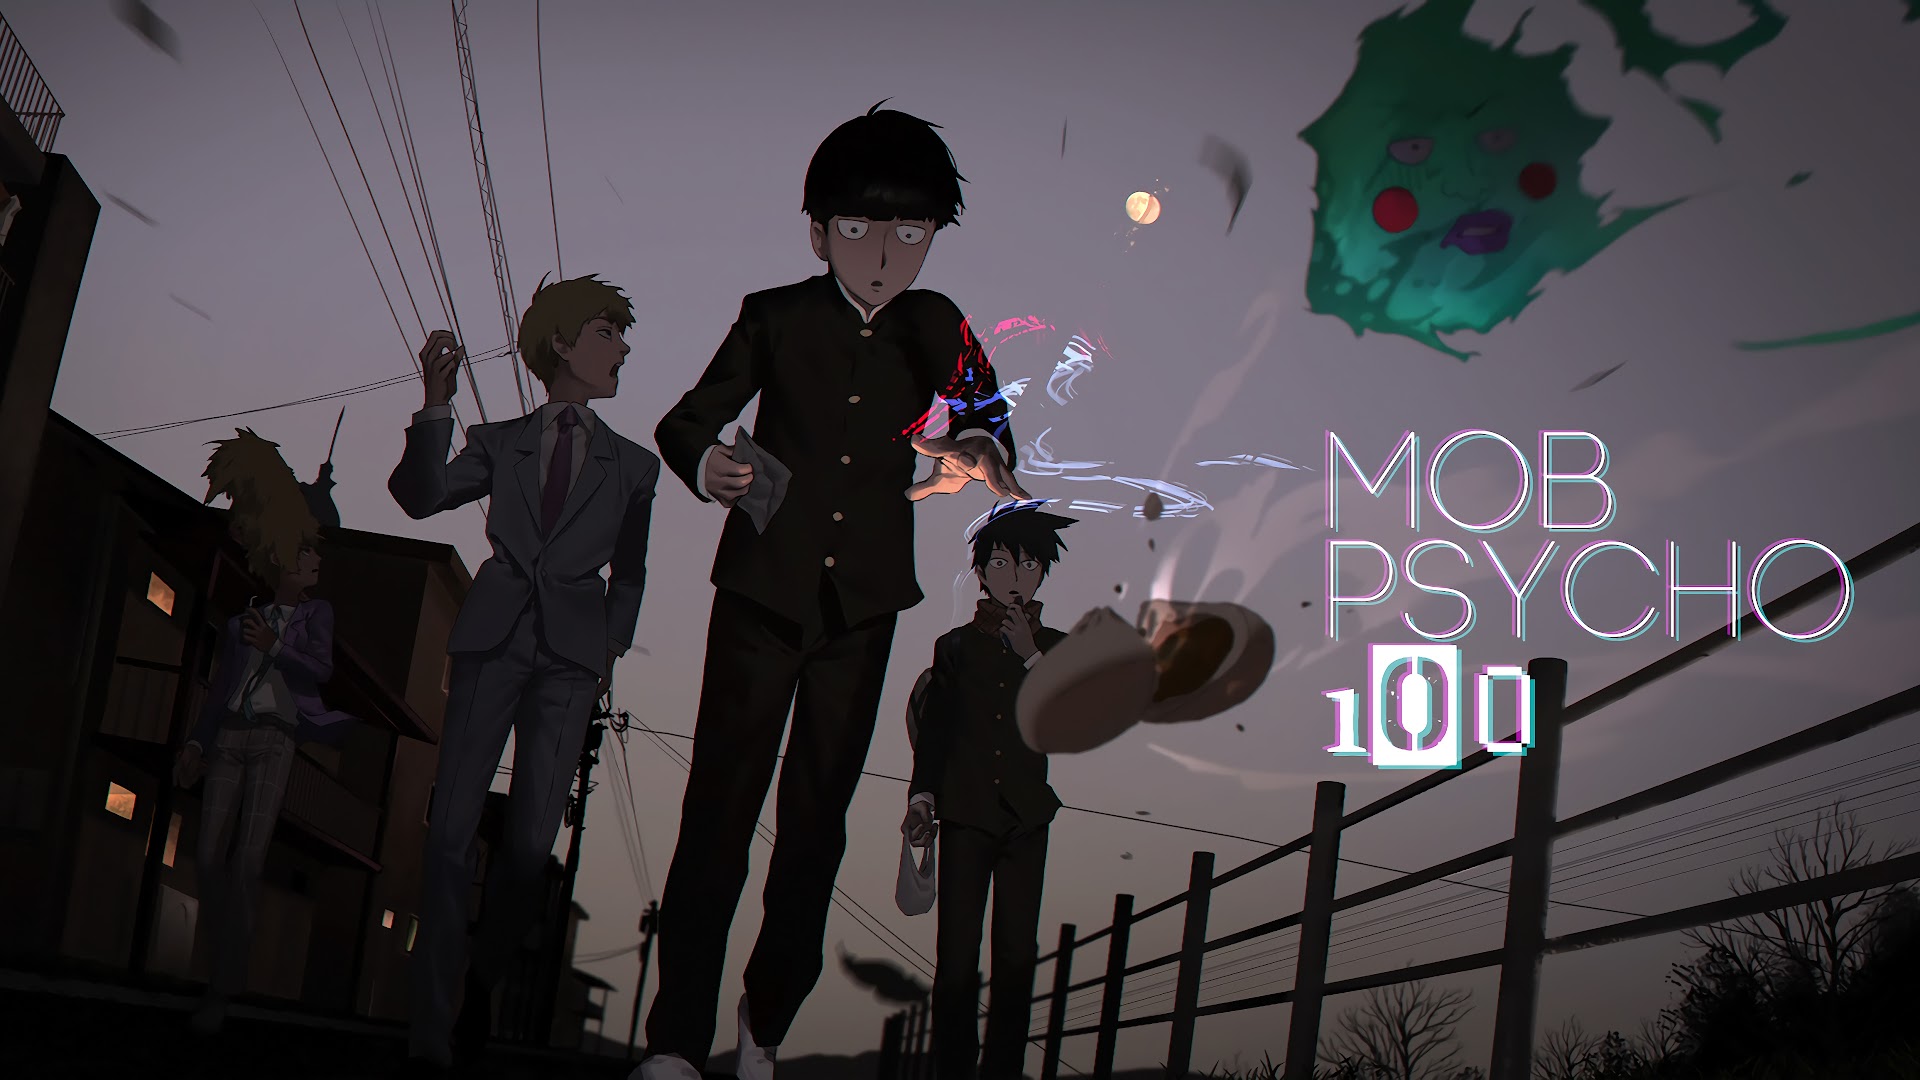 Mob Psycho 100 Anime Characters 4K Wallpaper